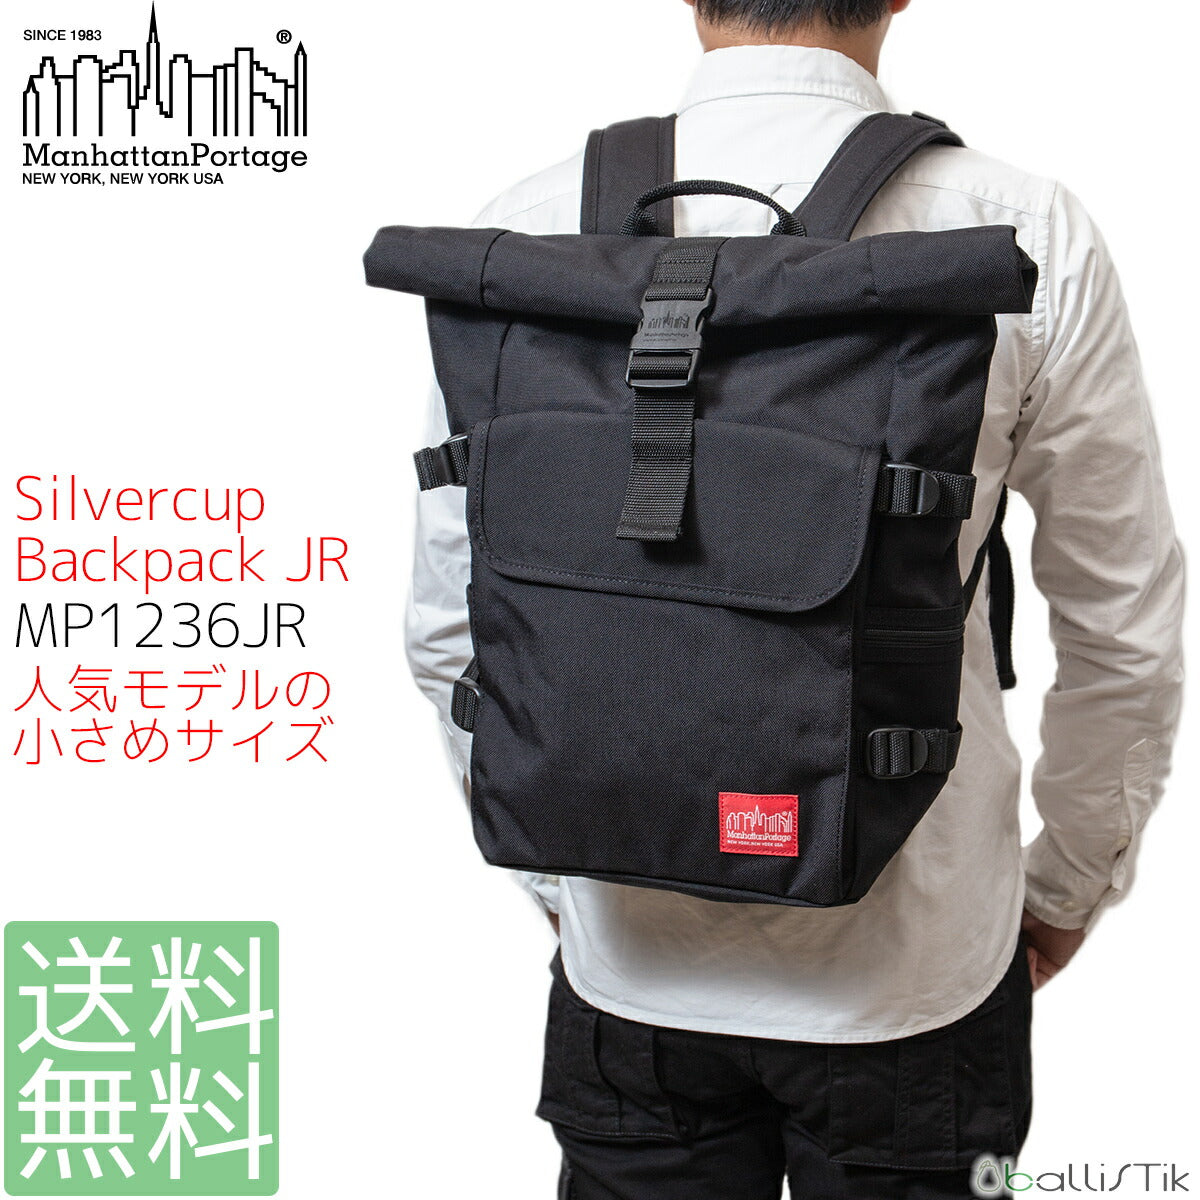 Silvercup Backpack JR